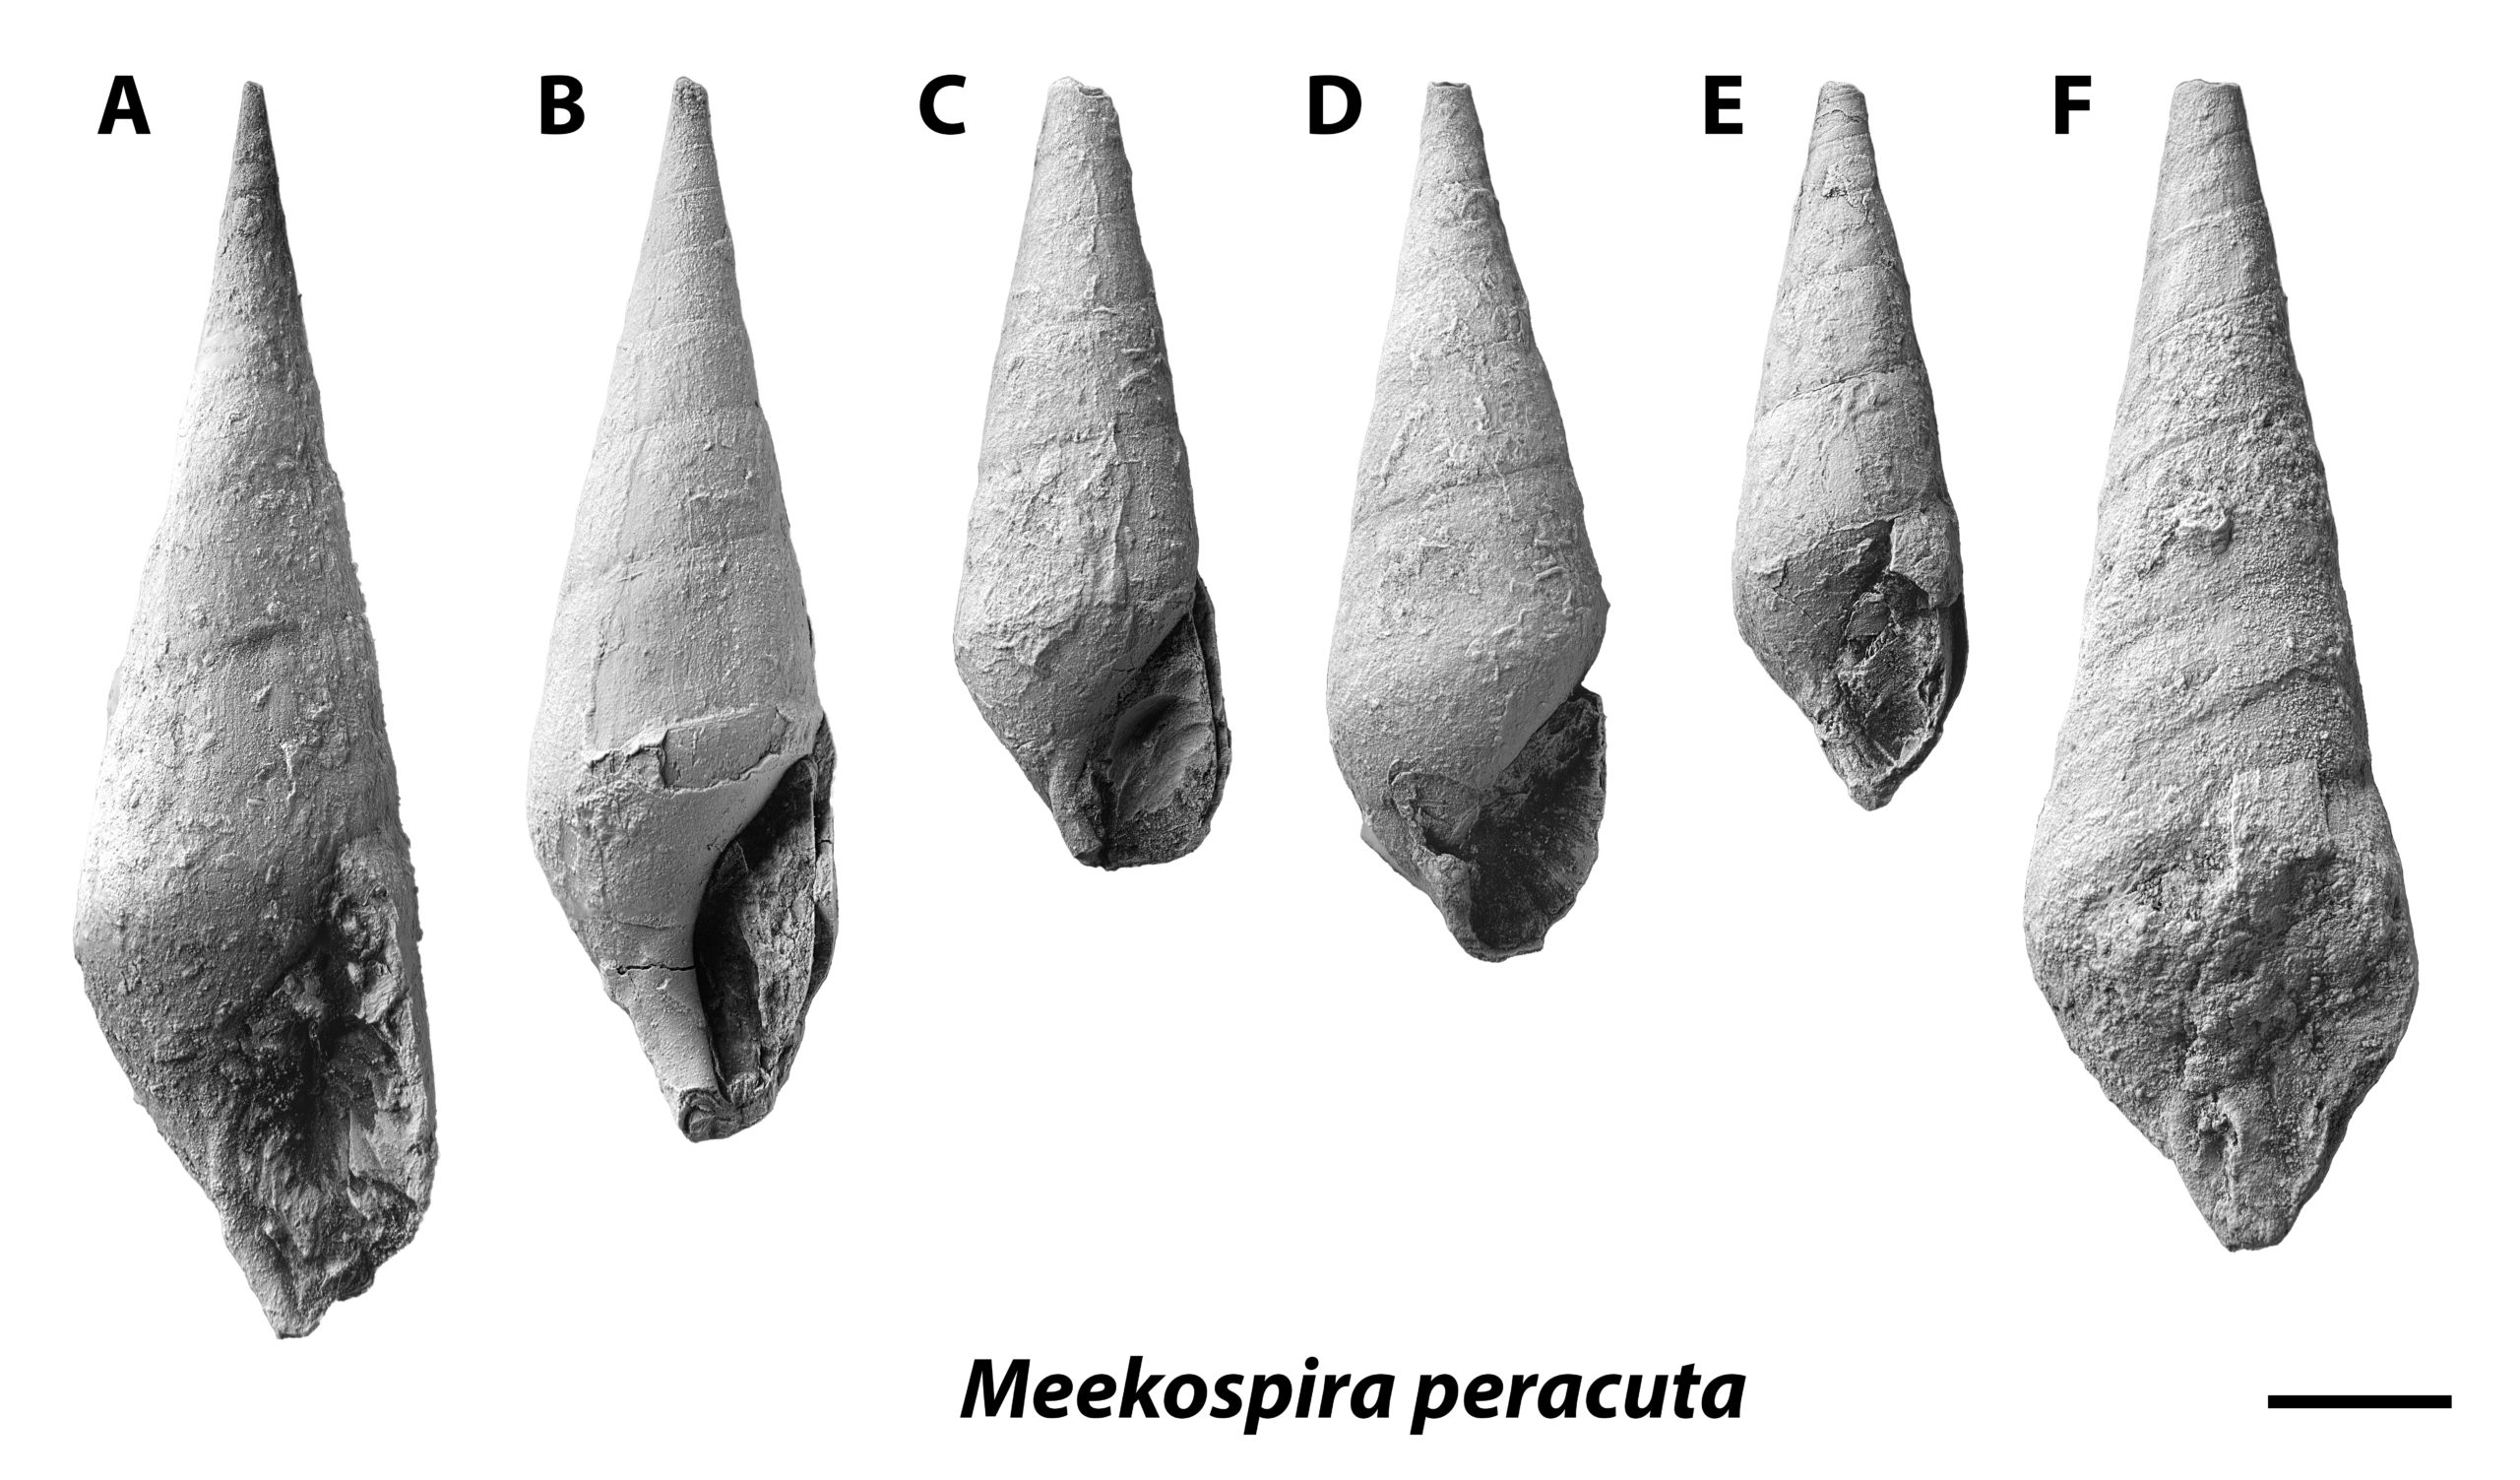 Specimens of Meekospira peracuta, a Paleozoic gastropod.